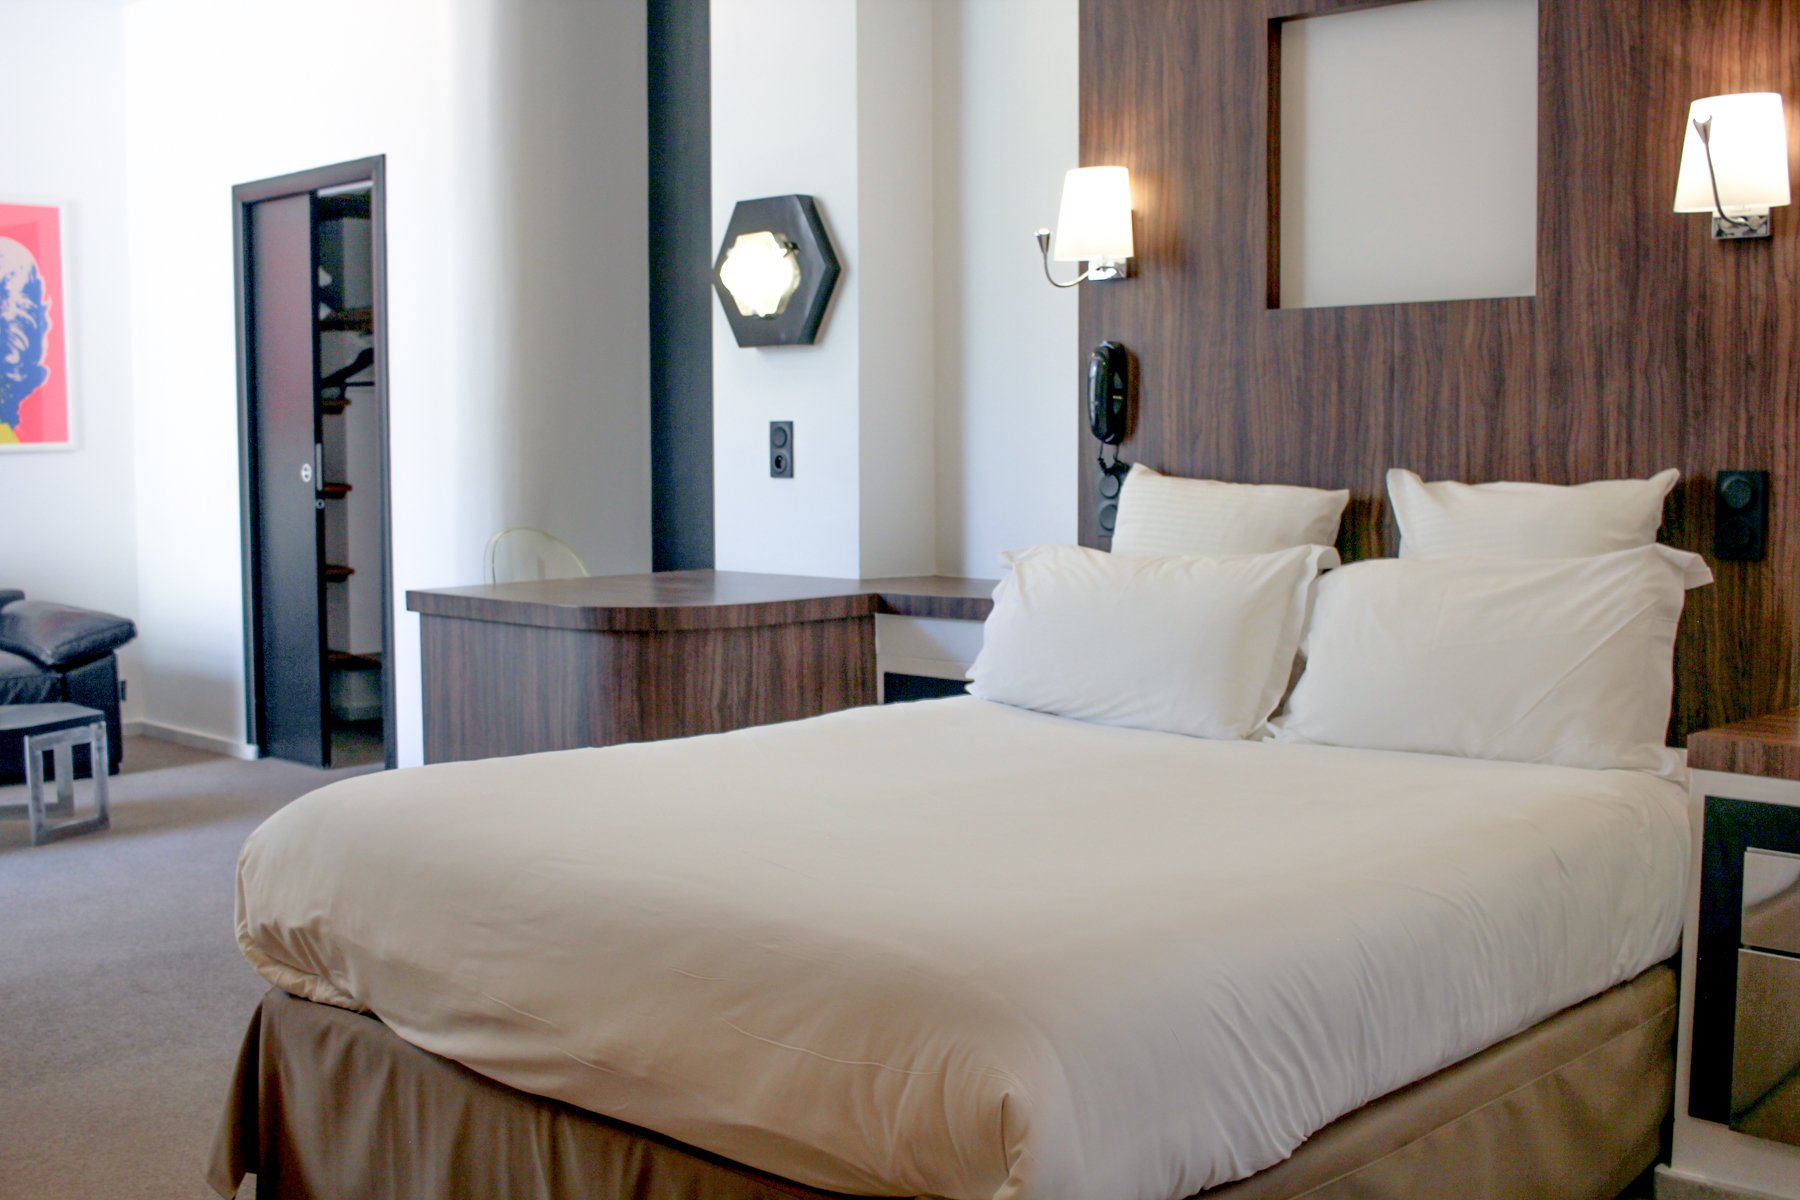 Hotel Monsigny Nice | Suite | Bathroom